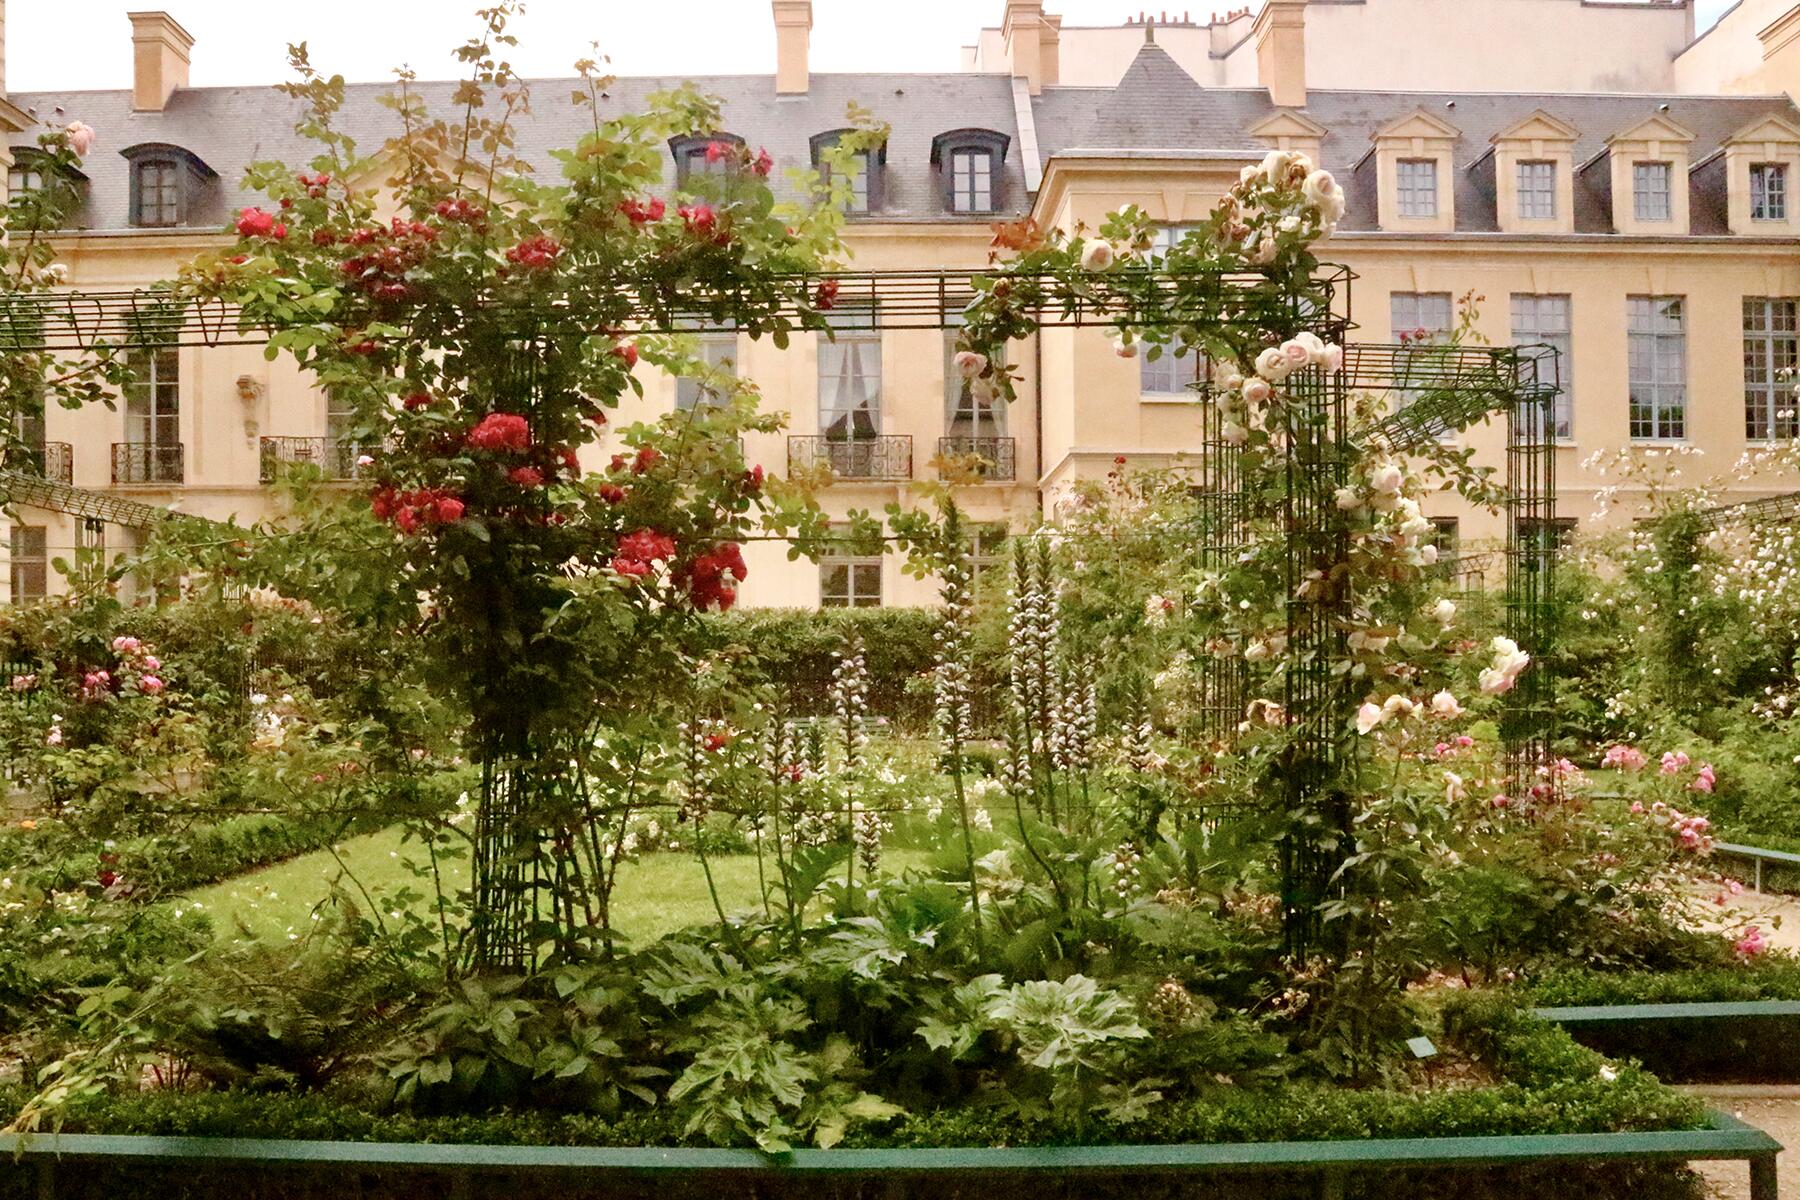 Where Are the Most Romantic Spots in Paris